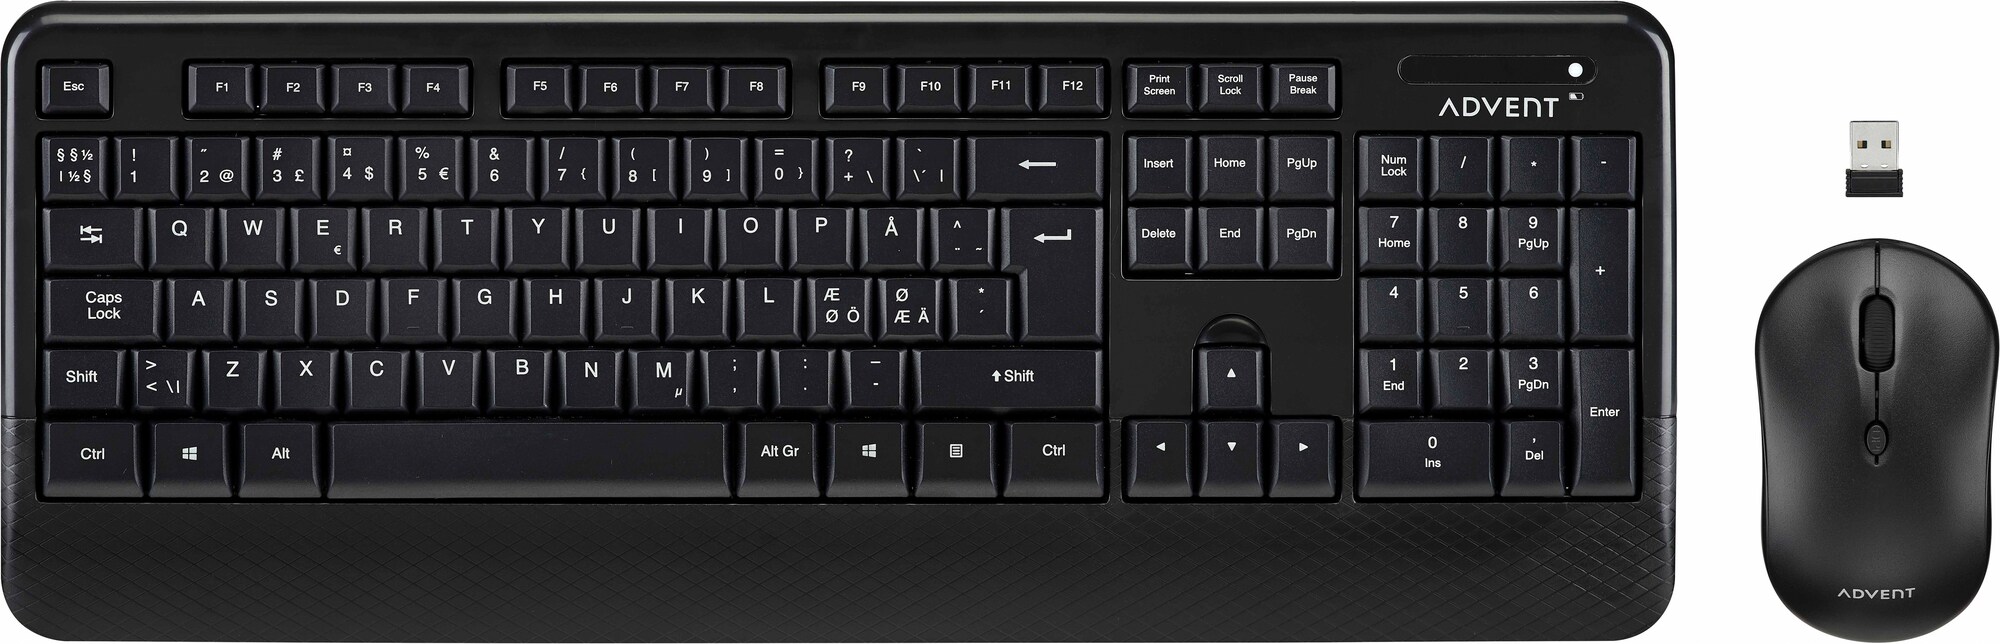 Advent trådløst tastatur og datamus - Gamingtastatur - Elkjøp